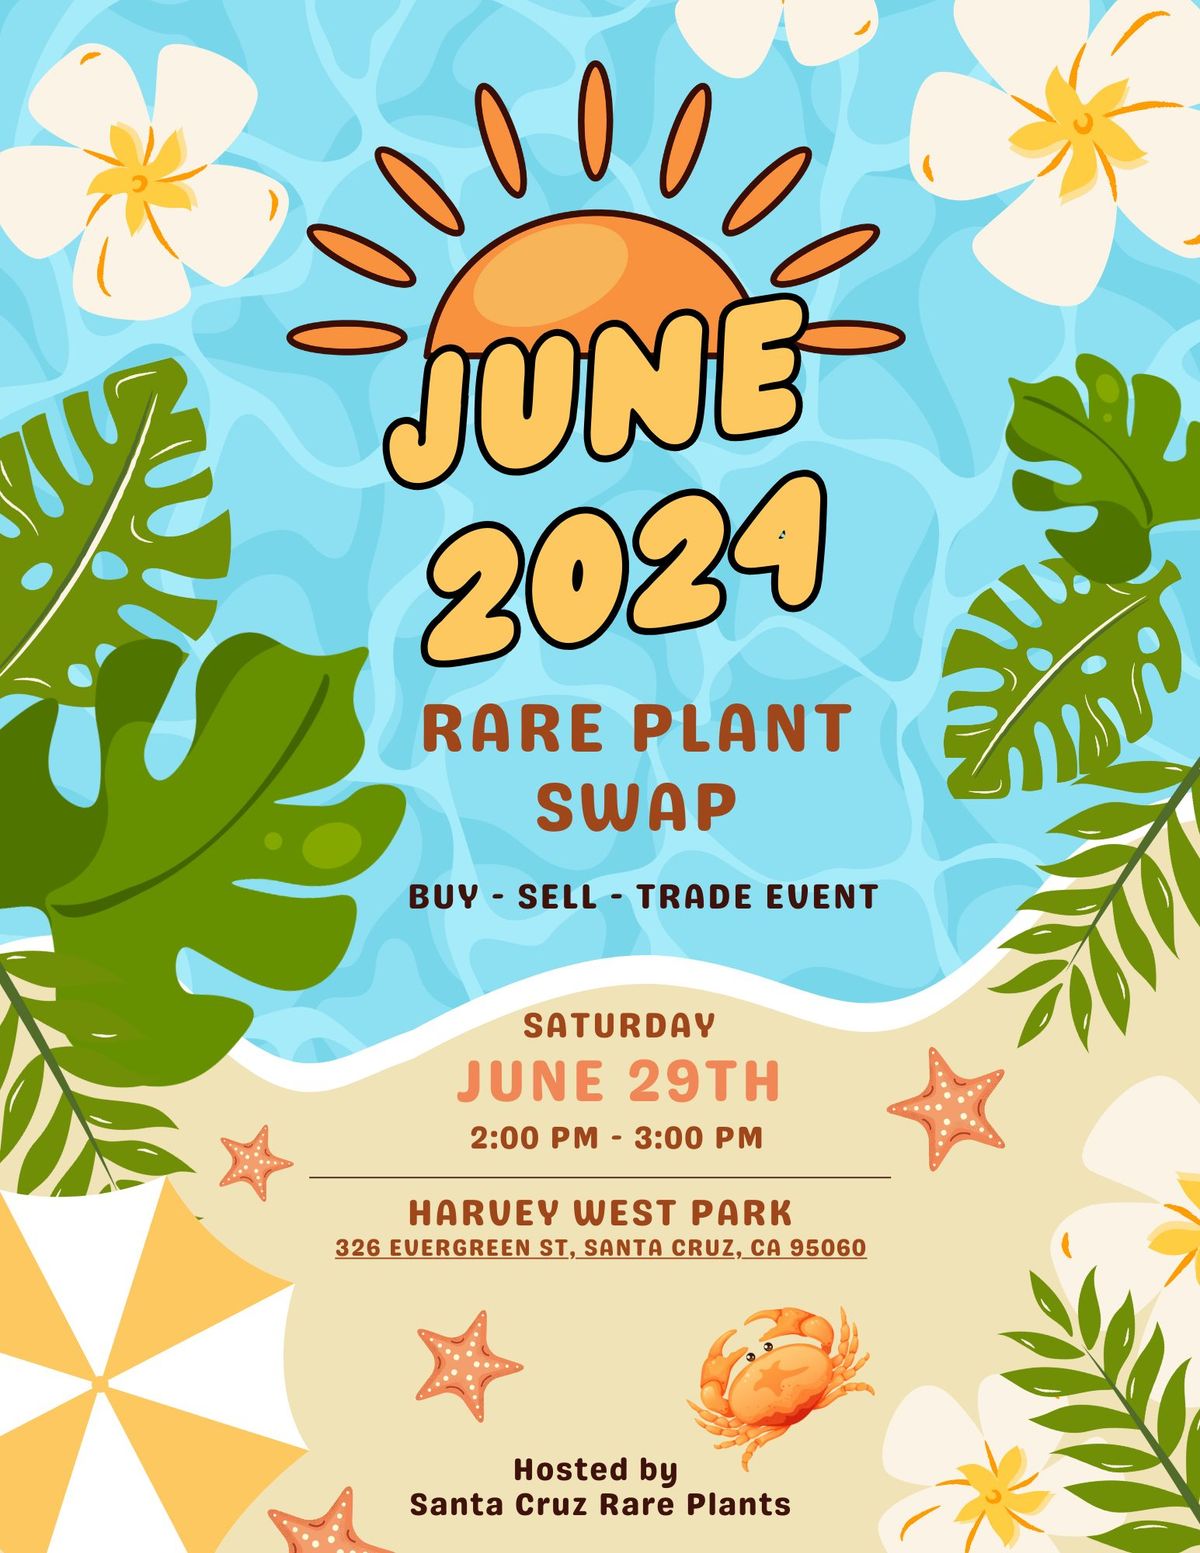 June 2024 Rare Plant Swap